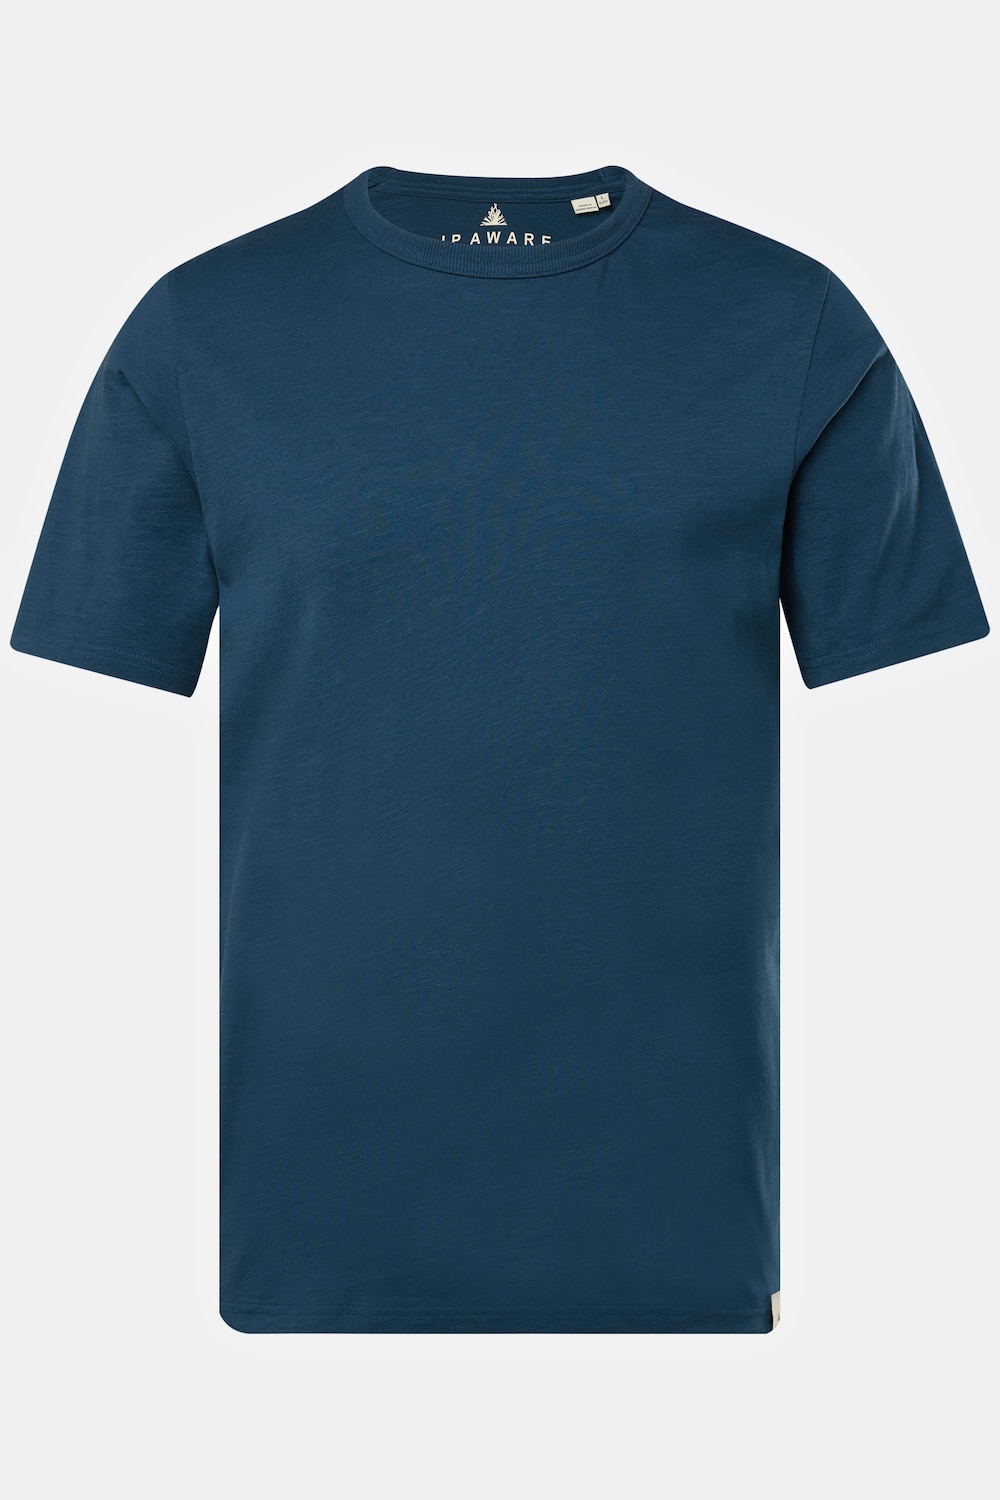 Grote Maten JP AWARE T-shirt, Heren, blauw, Maat: 3XL, Katoen, JP-Aware